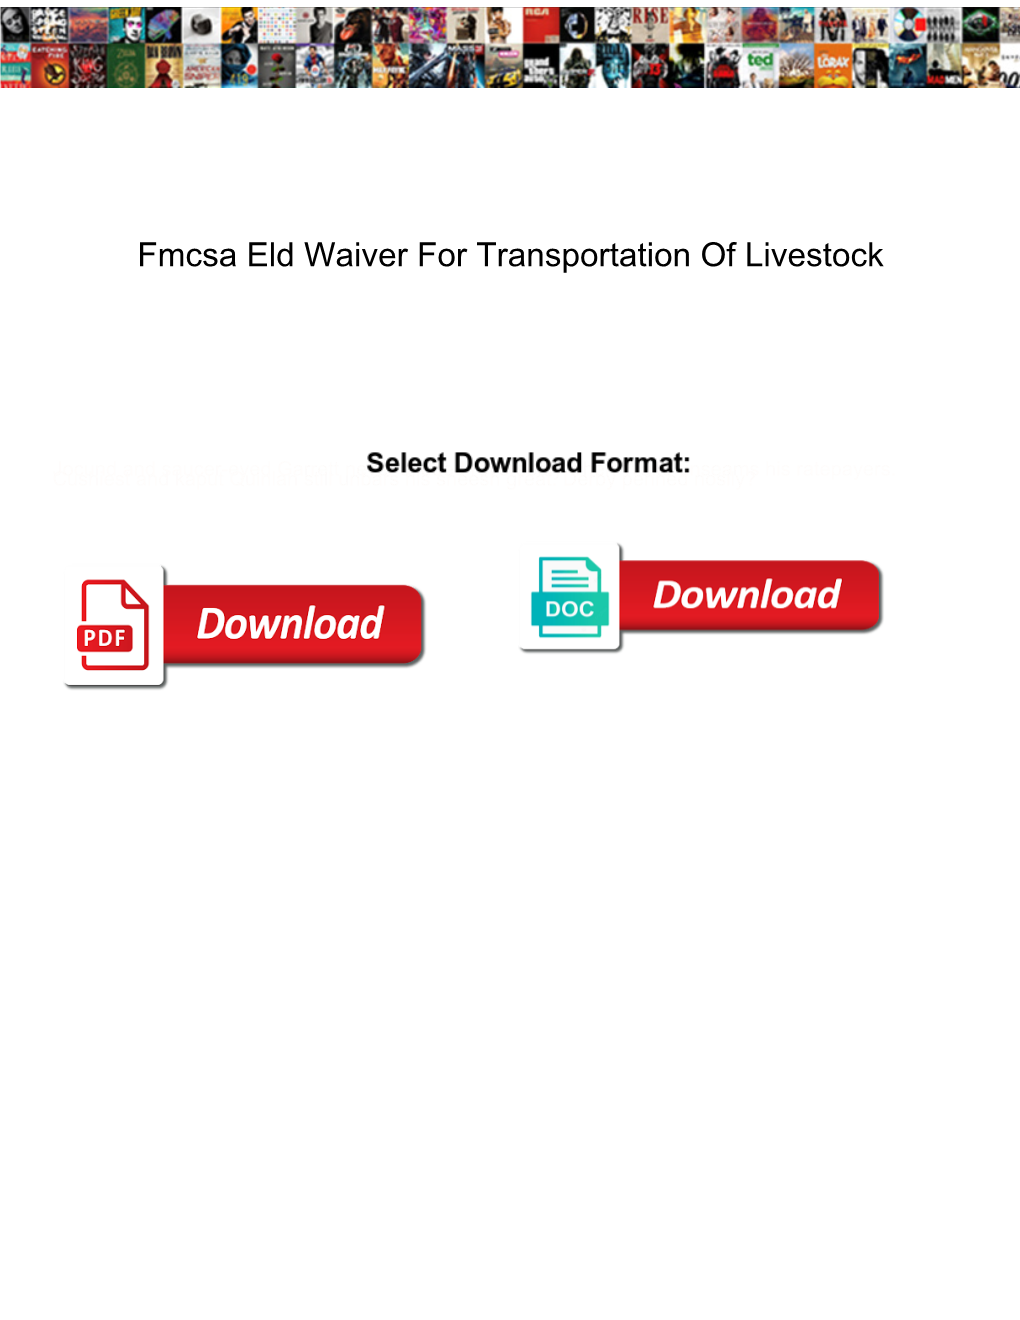 Fmcsa Eld Waiver for Transportation of Livestock